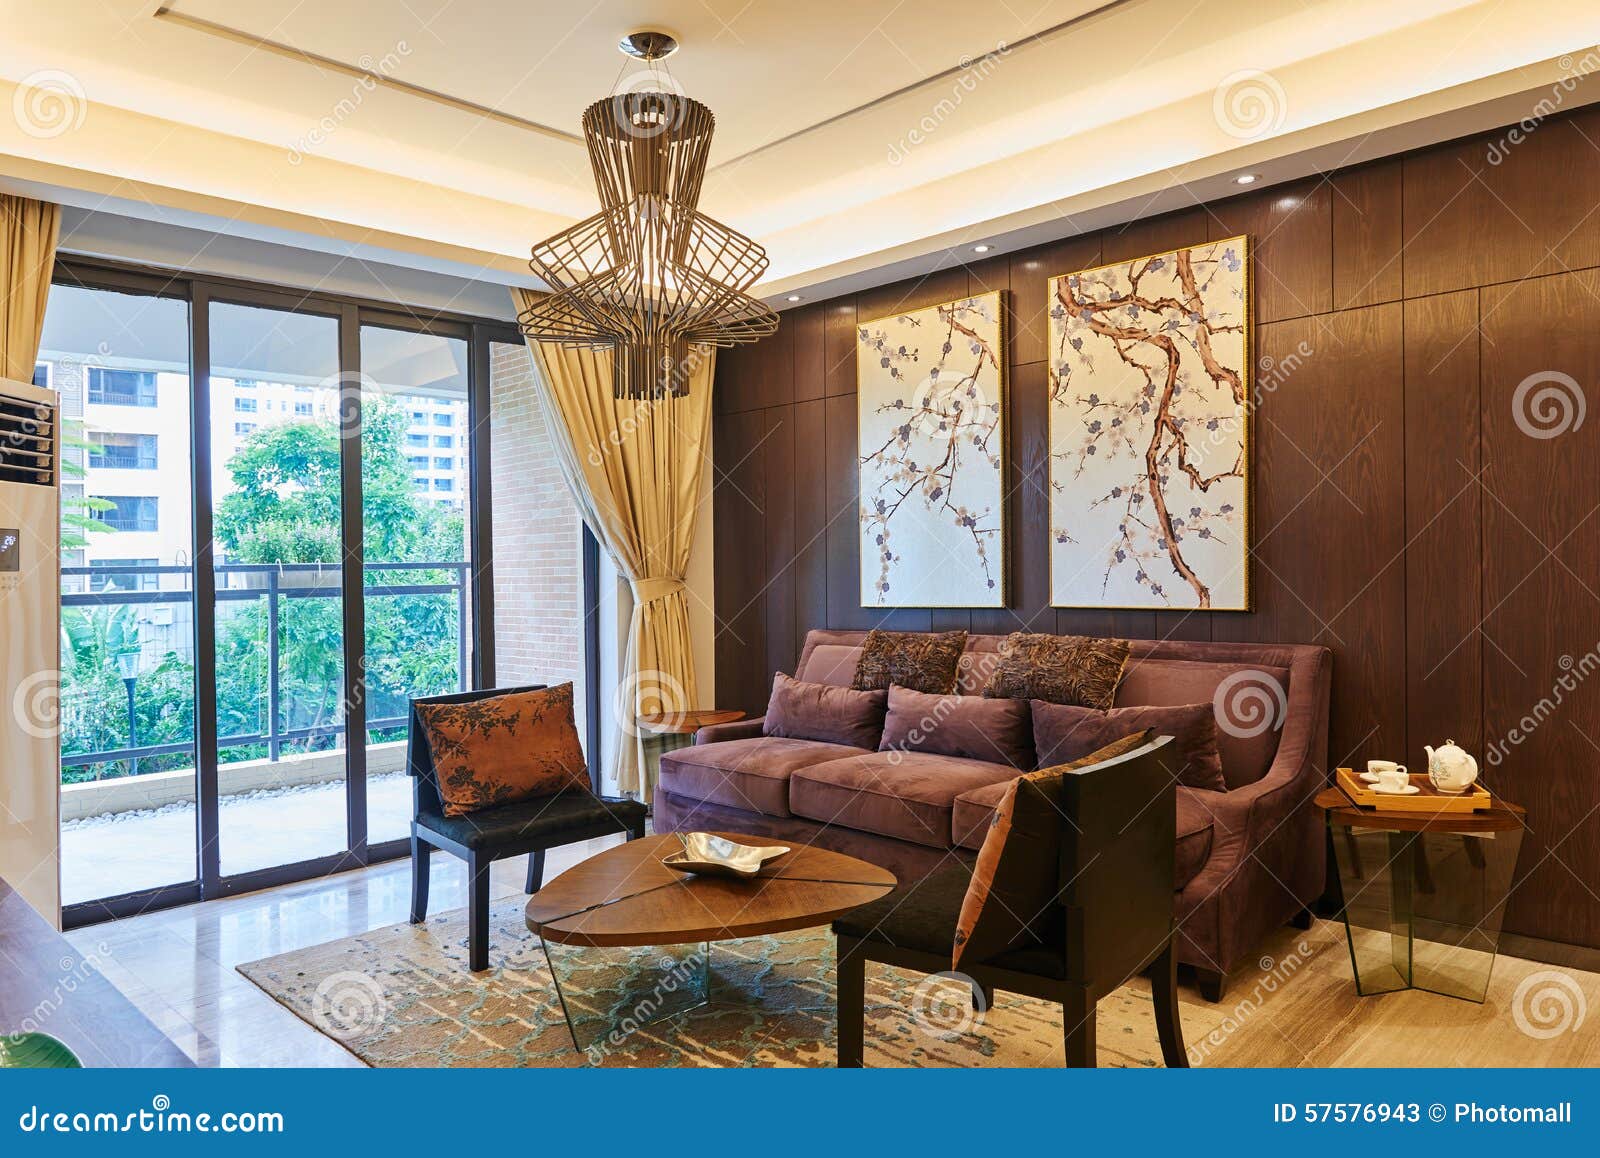 Oriental Style Luxury Living Room Stock Image - Image of comfort, china